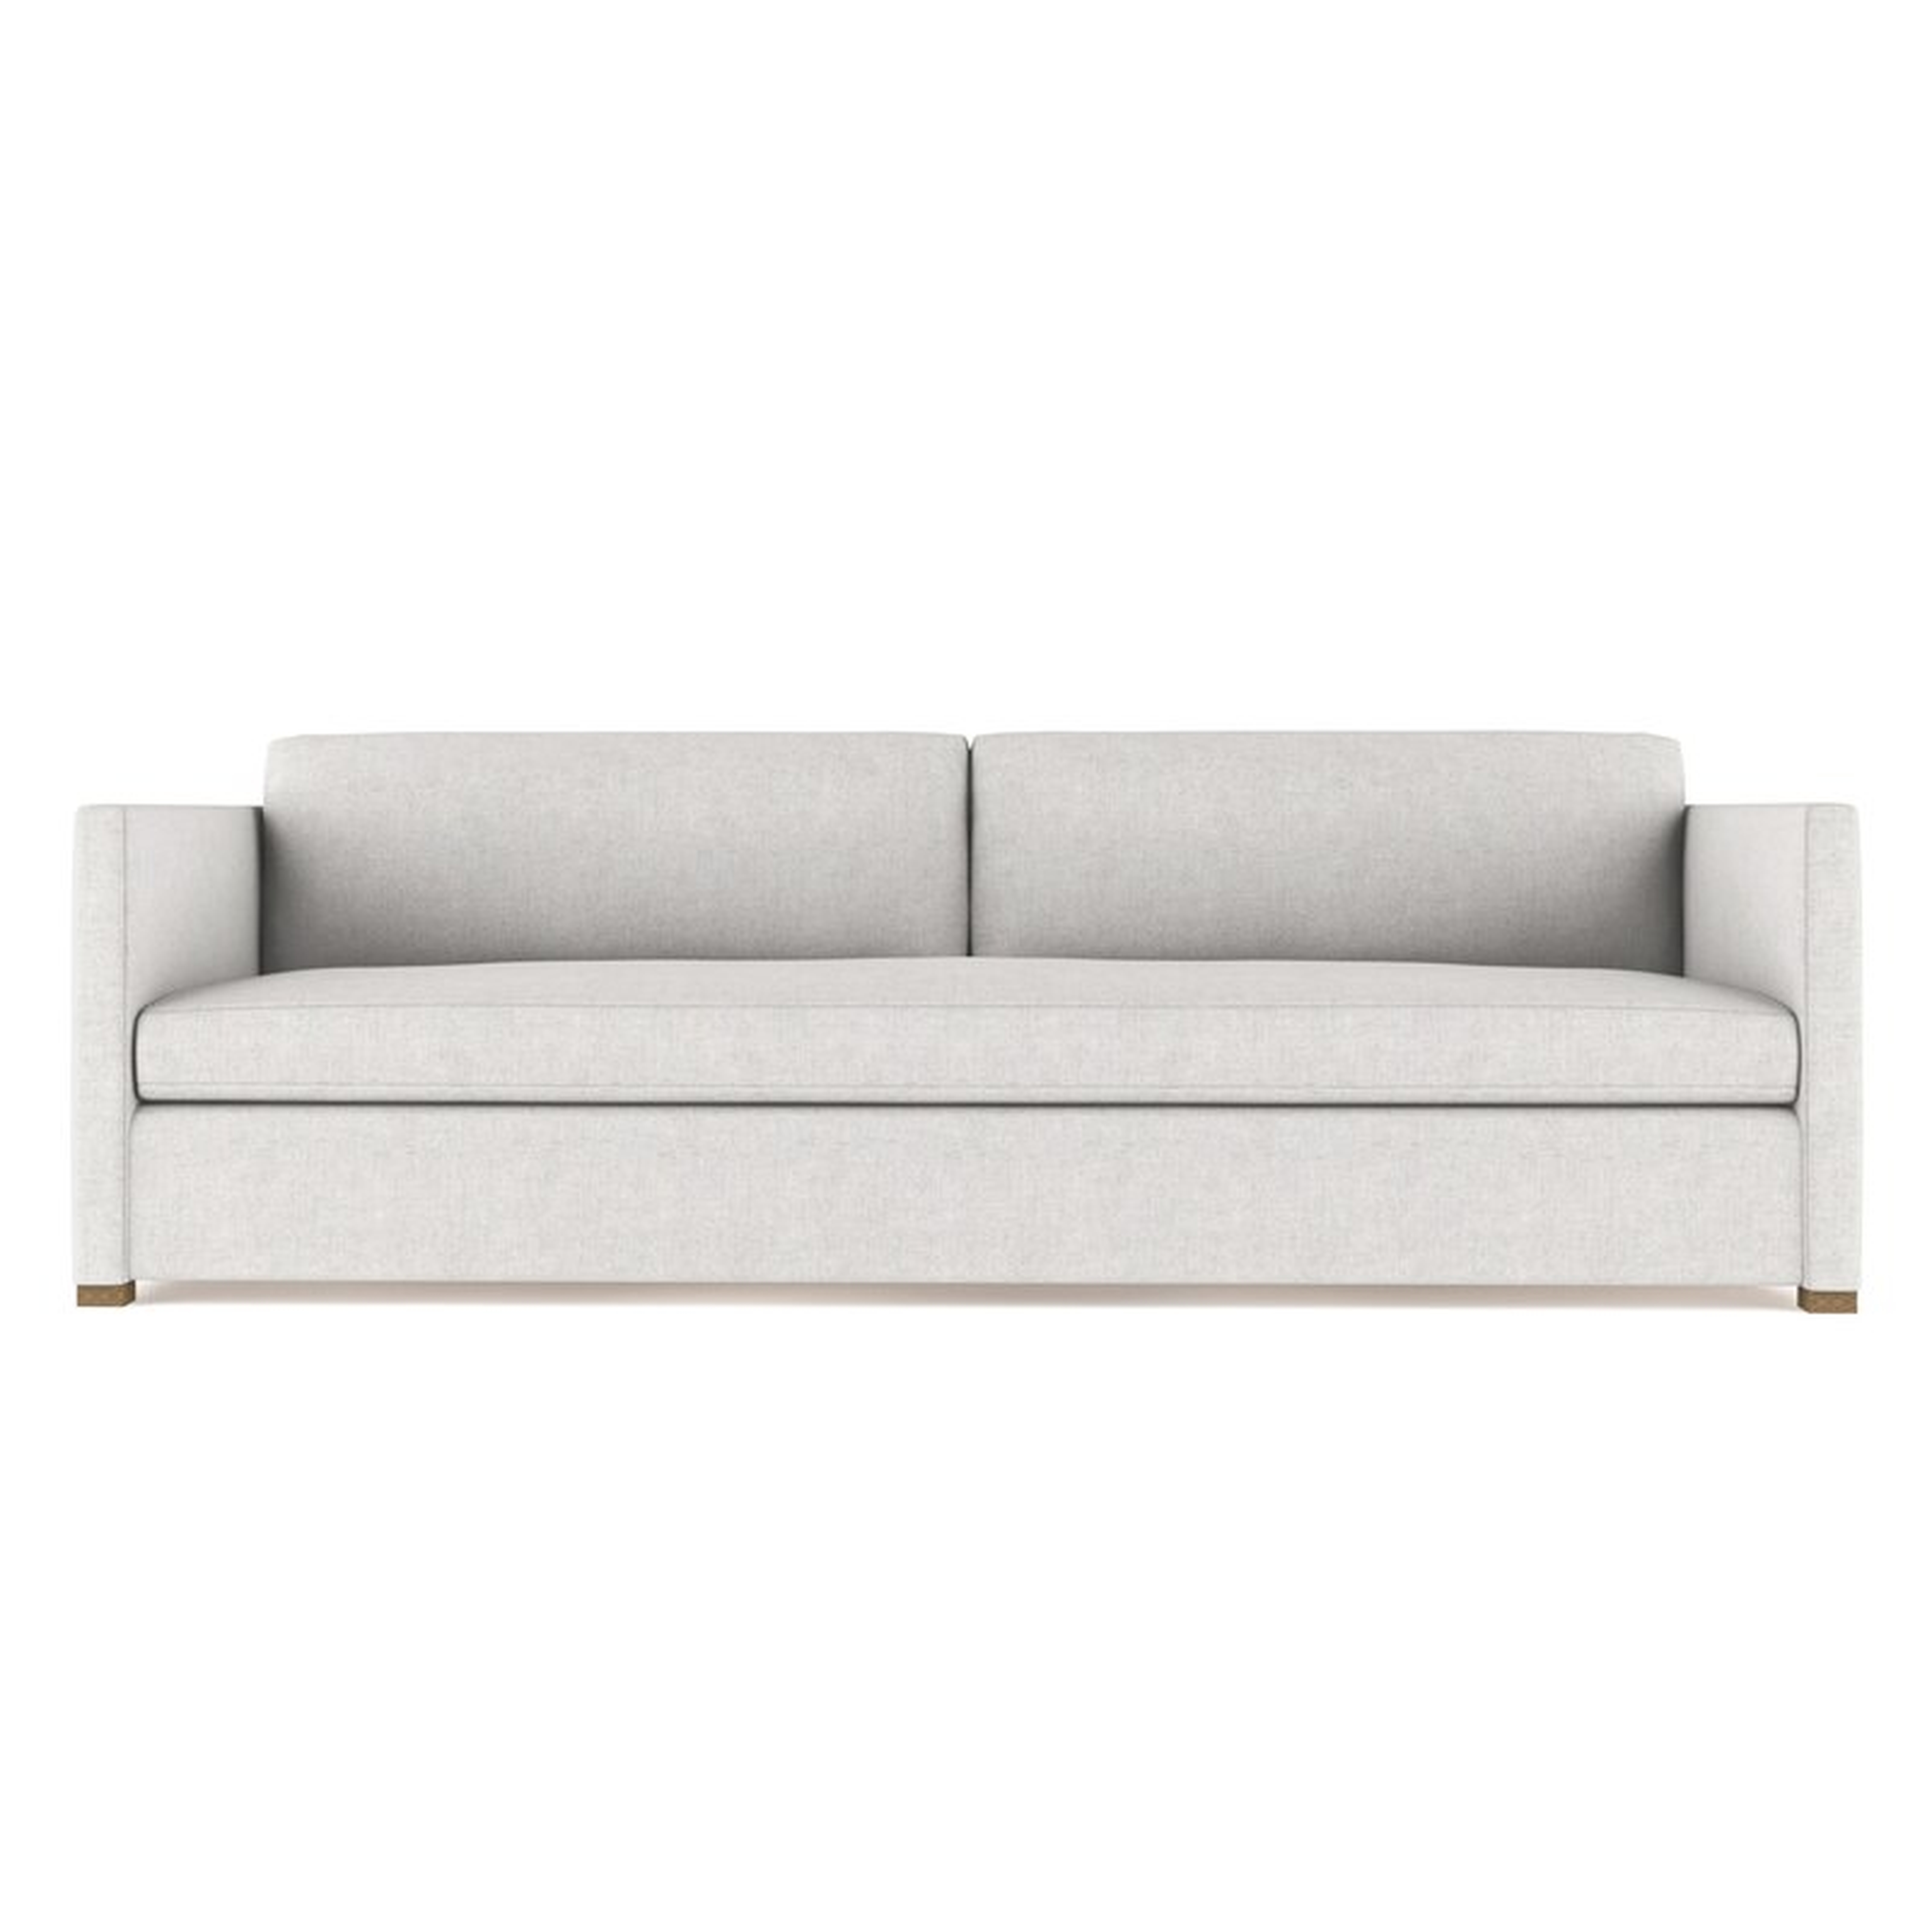 Tandem Arbor Madison Square Arm Sofa Fabric: Silver Streak Velvet, Size: 33" H x 72" W x 41" D - Perigold